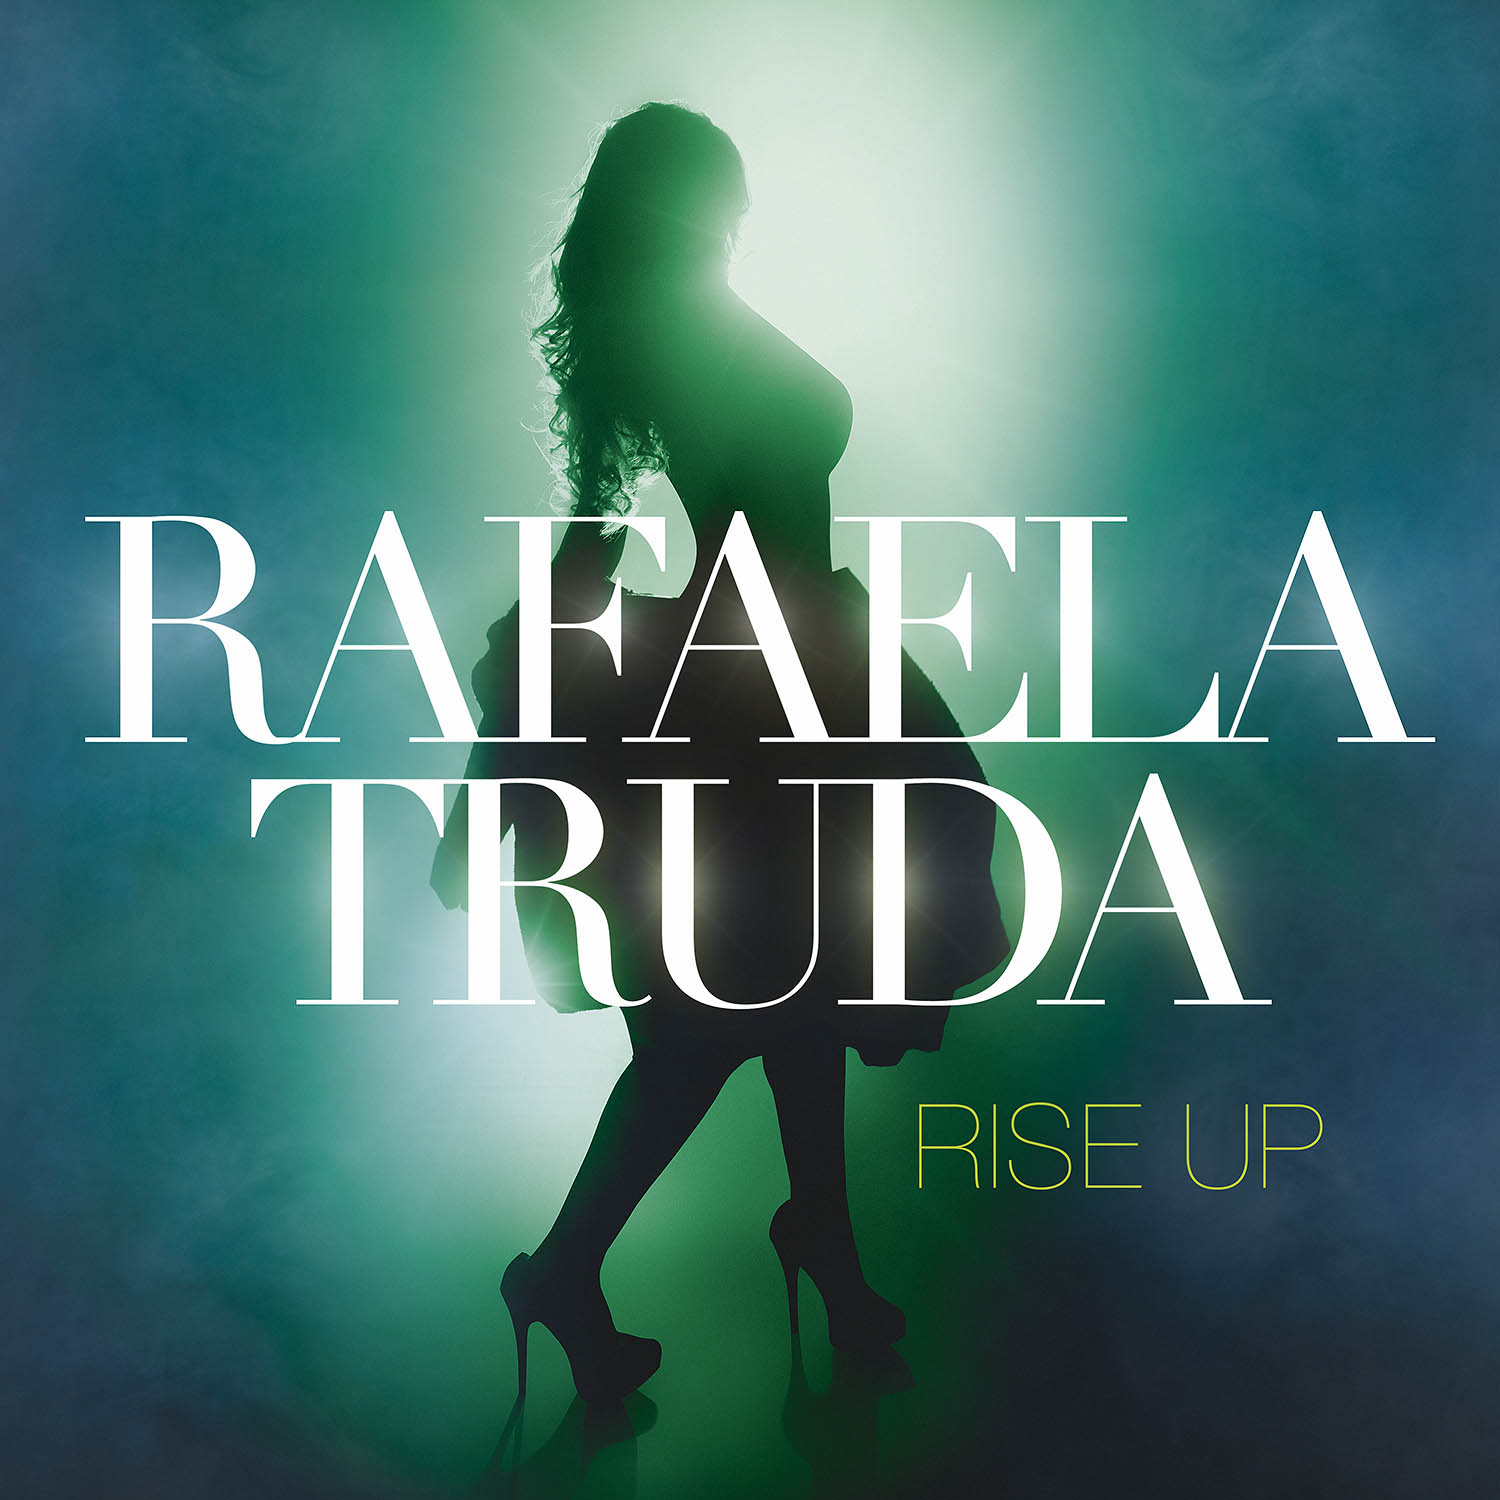 Rafaela Truda Rise Up singlen kannen suunnittelu, Therwiz Design